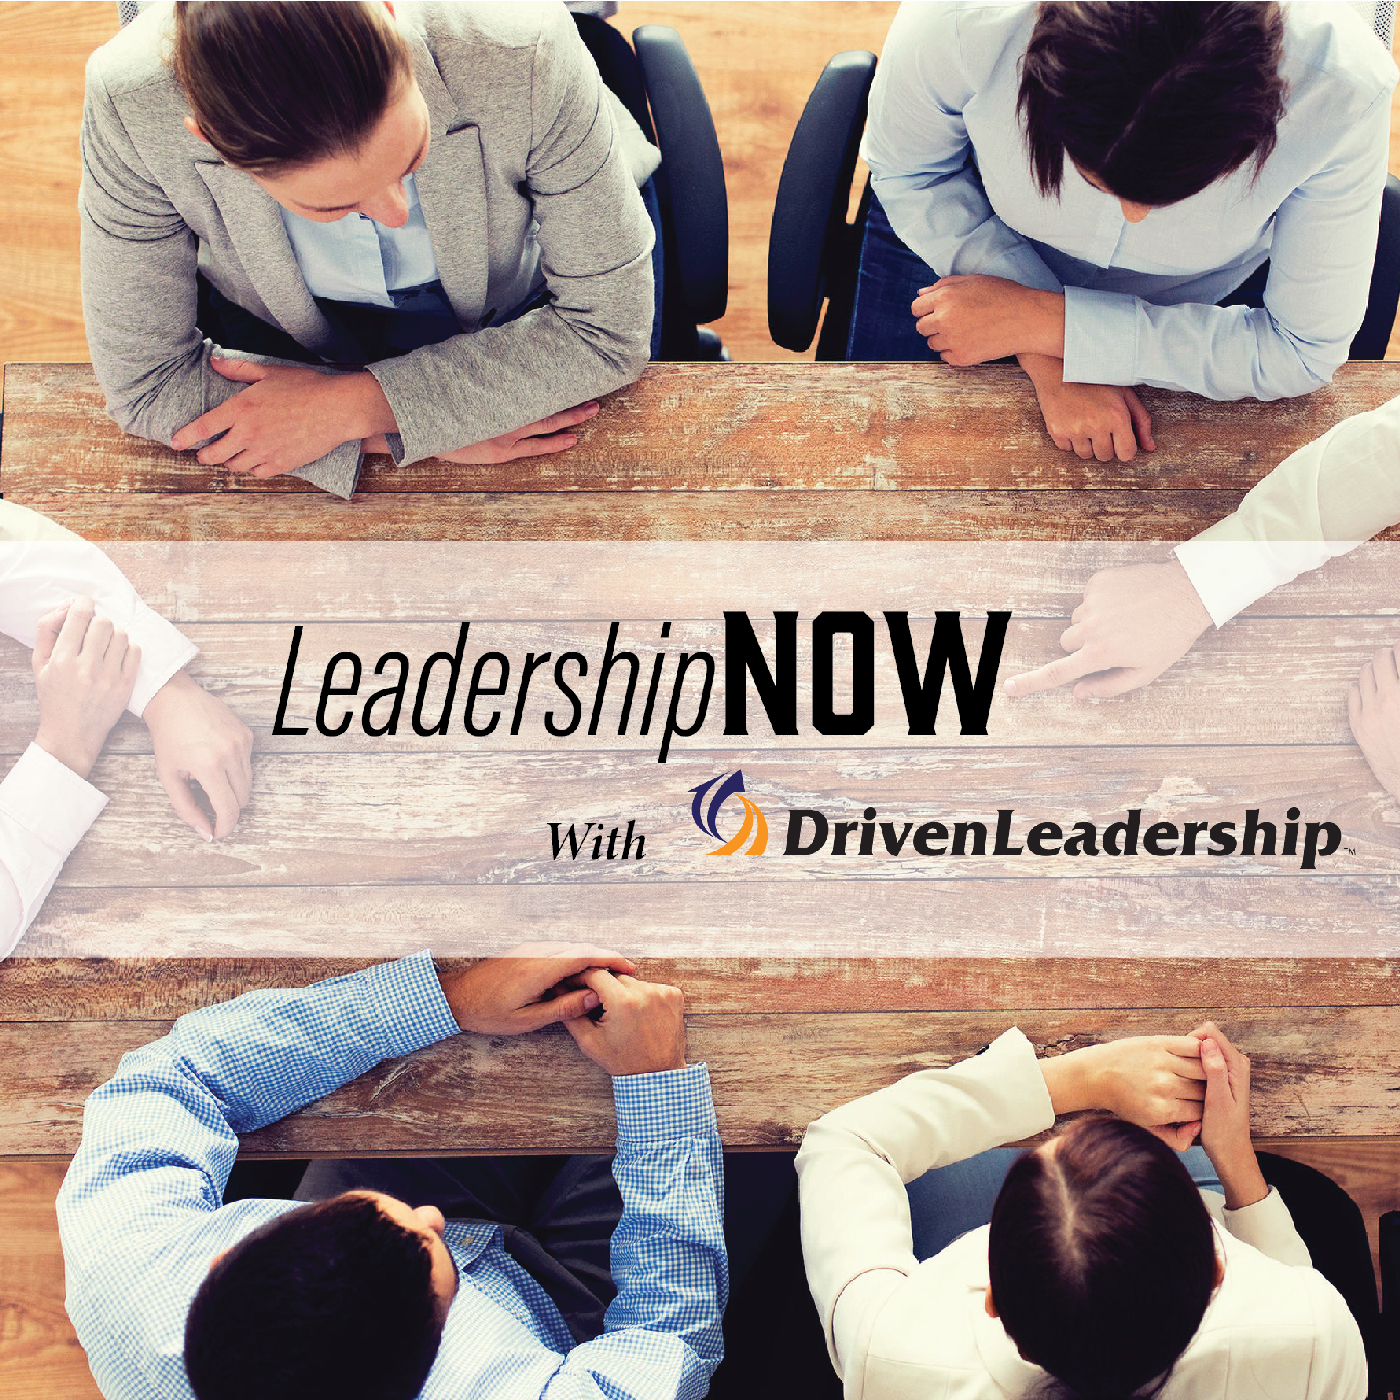 Driven LeadershipNOW